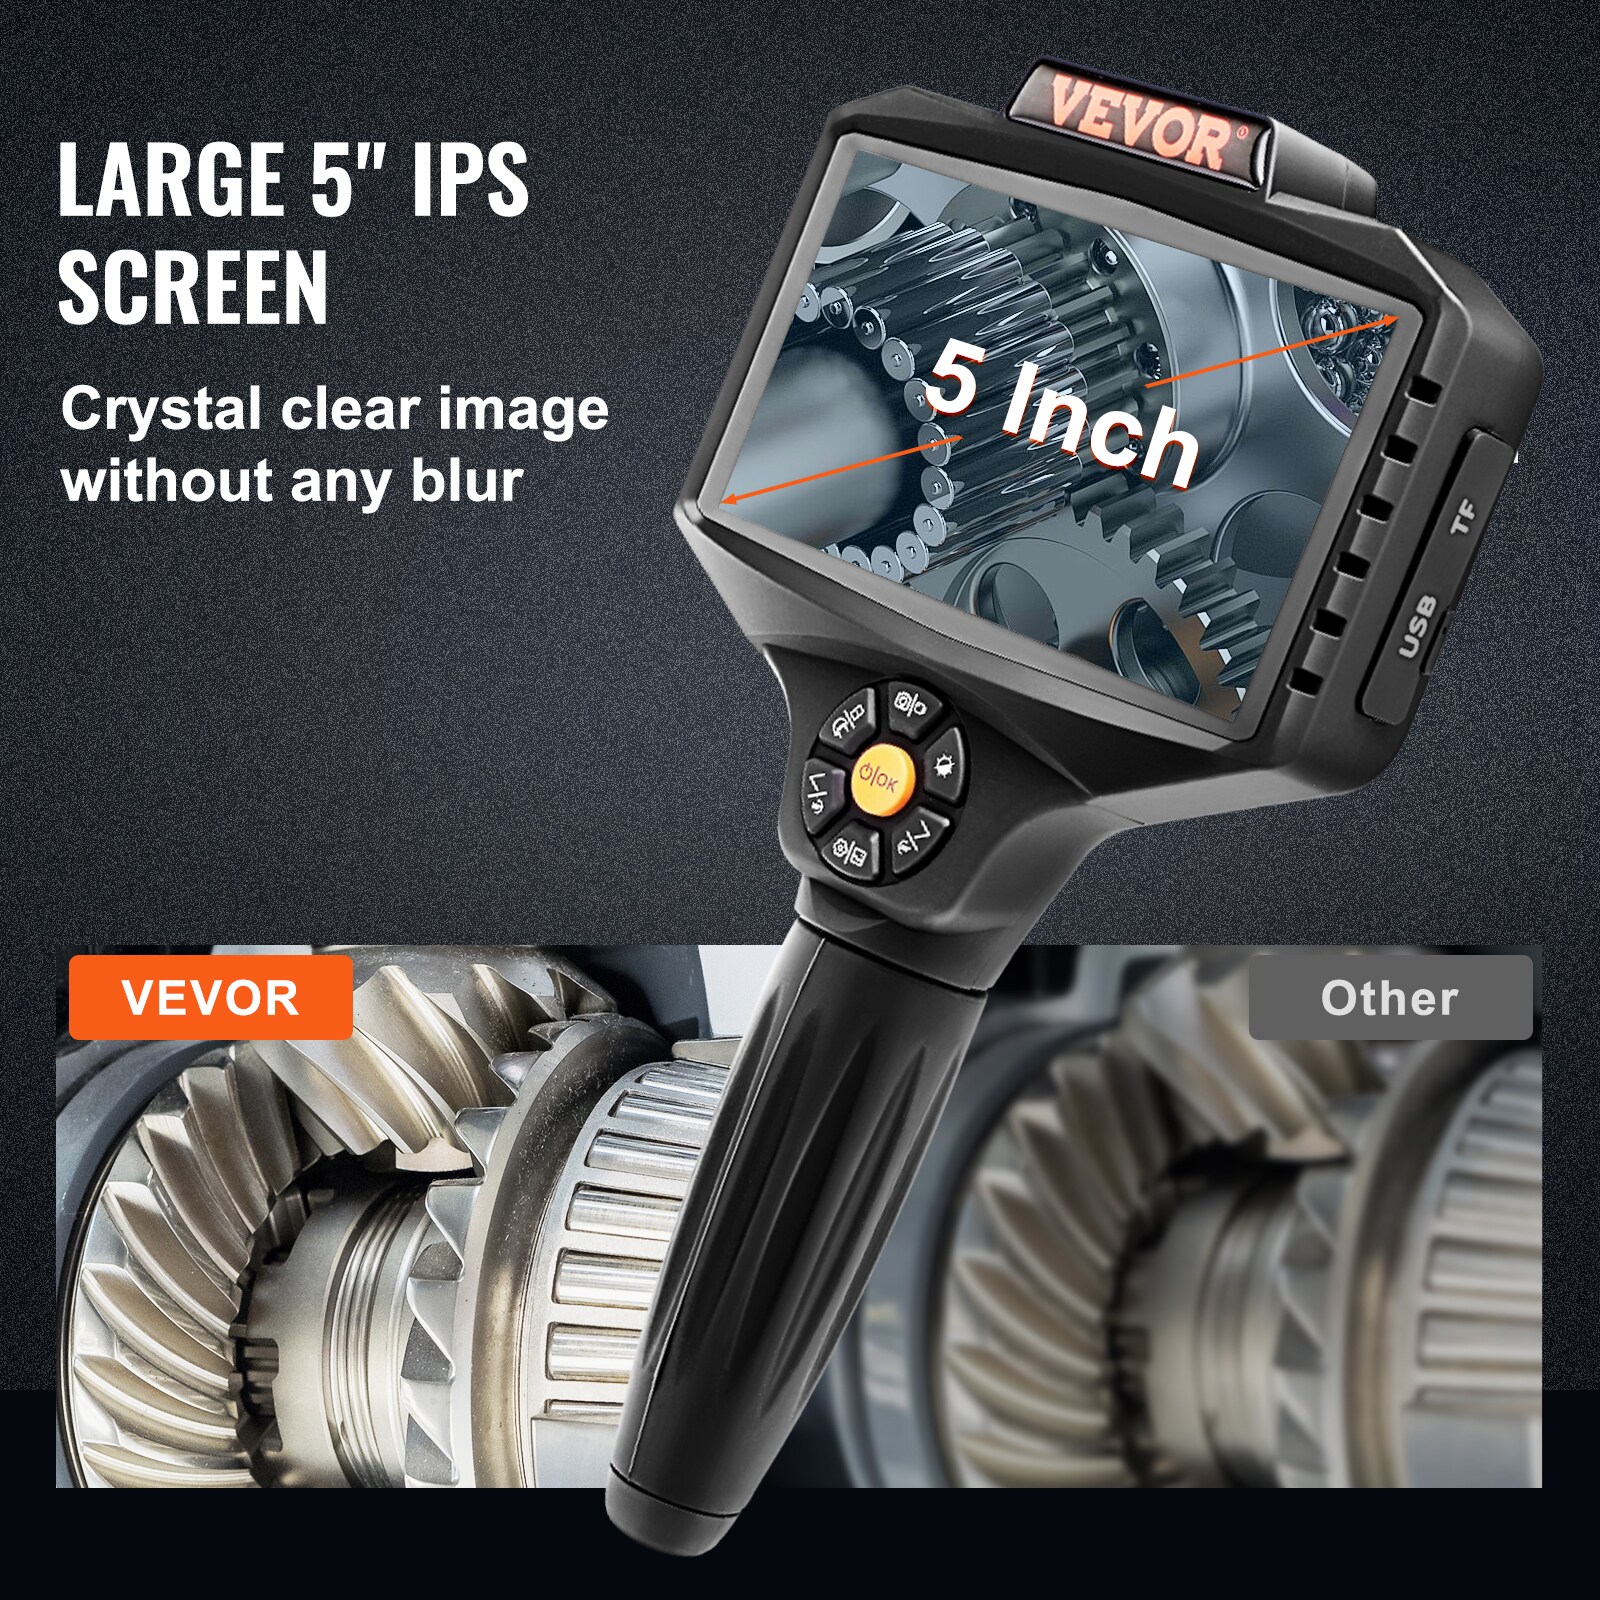 VEVOR Endoscope Camera 1080P HD 5 IPS Borescope 2-Way 180° Articulating 8X  Zoom